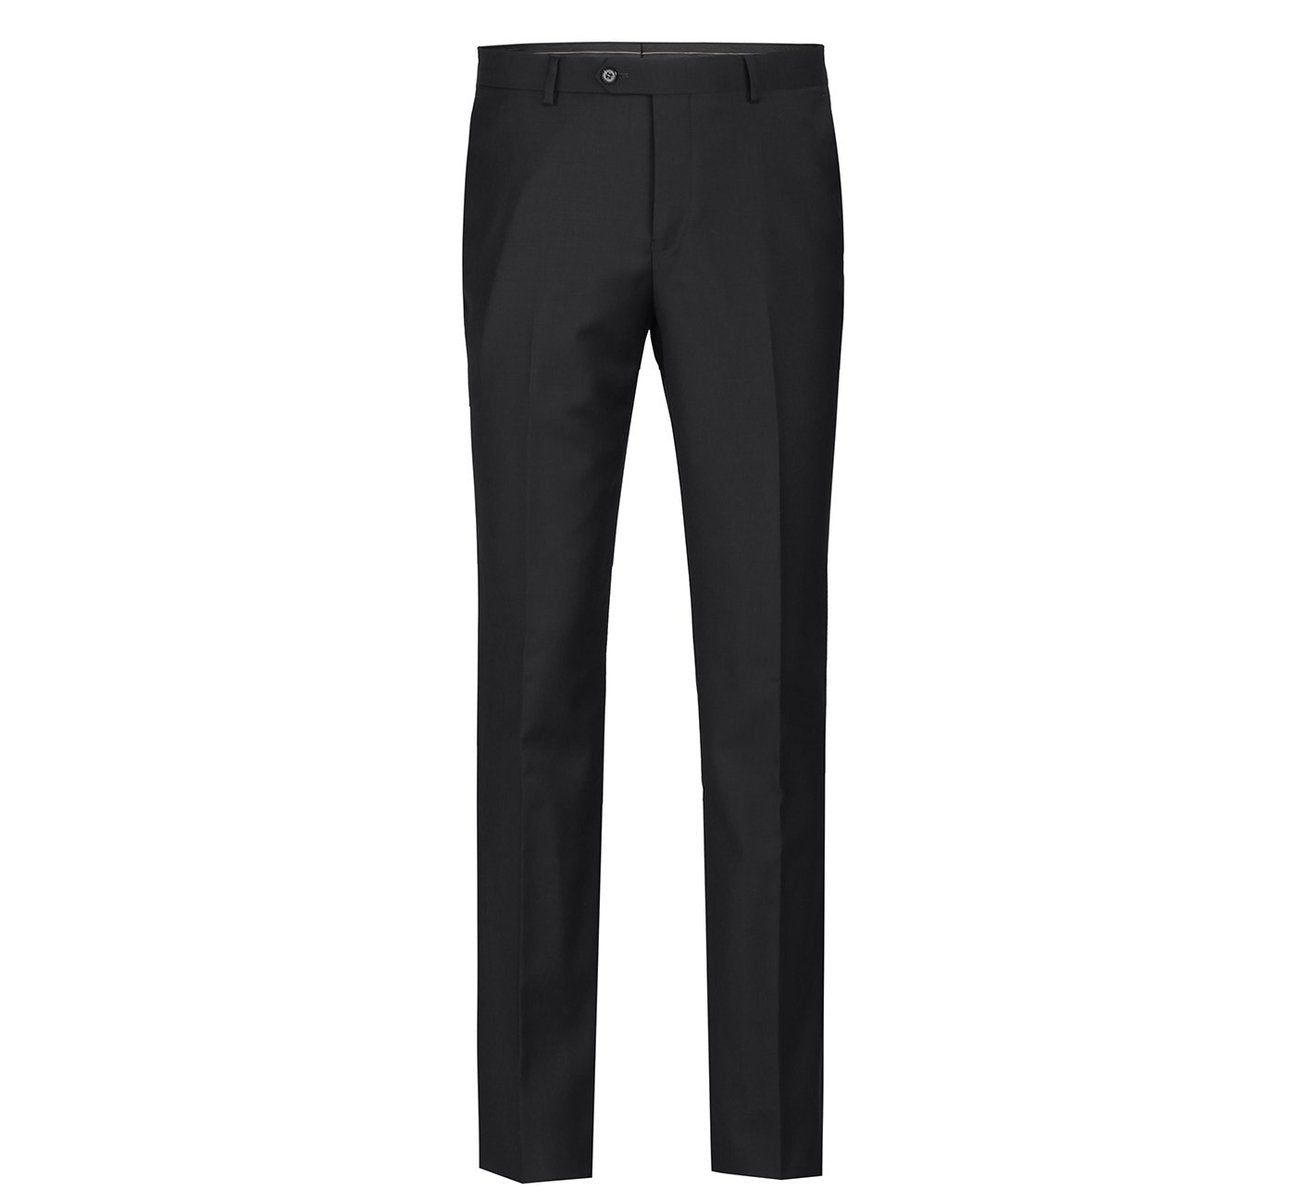 RENOIR Black Regular Fit Flat Front Wool Suit Pant 508-1